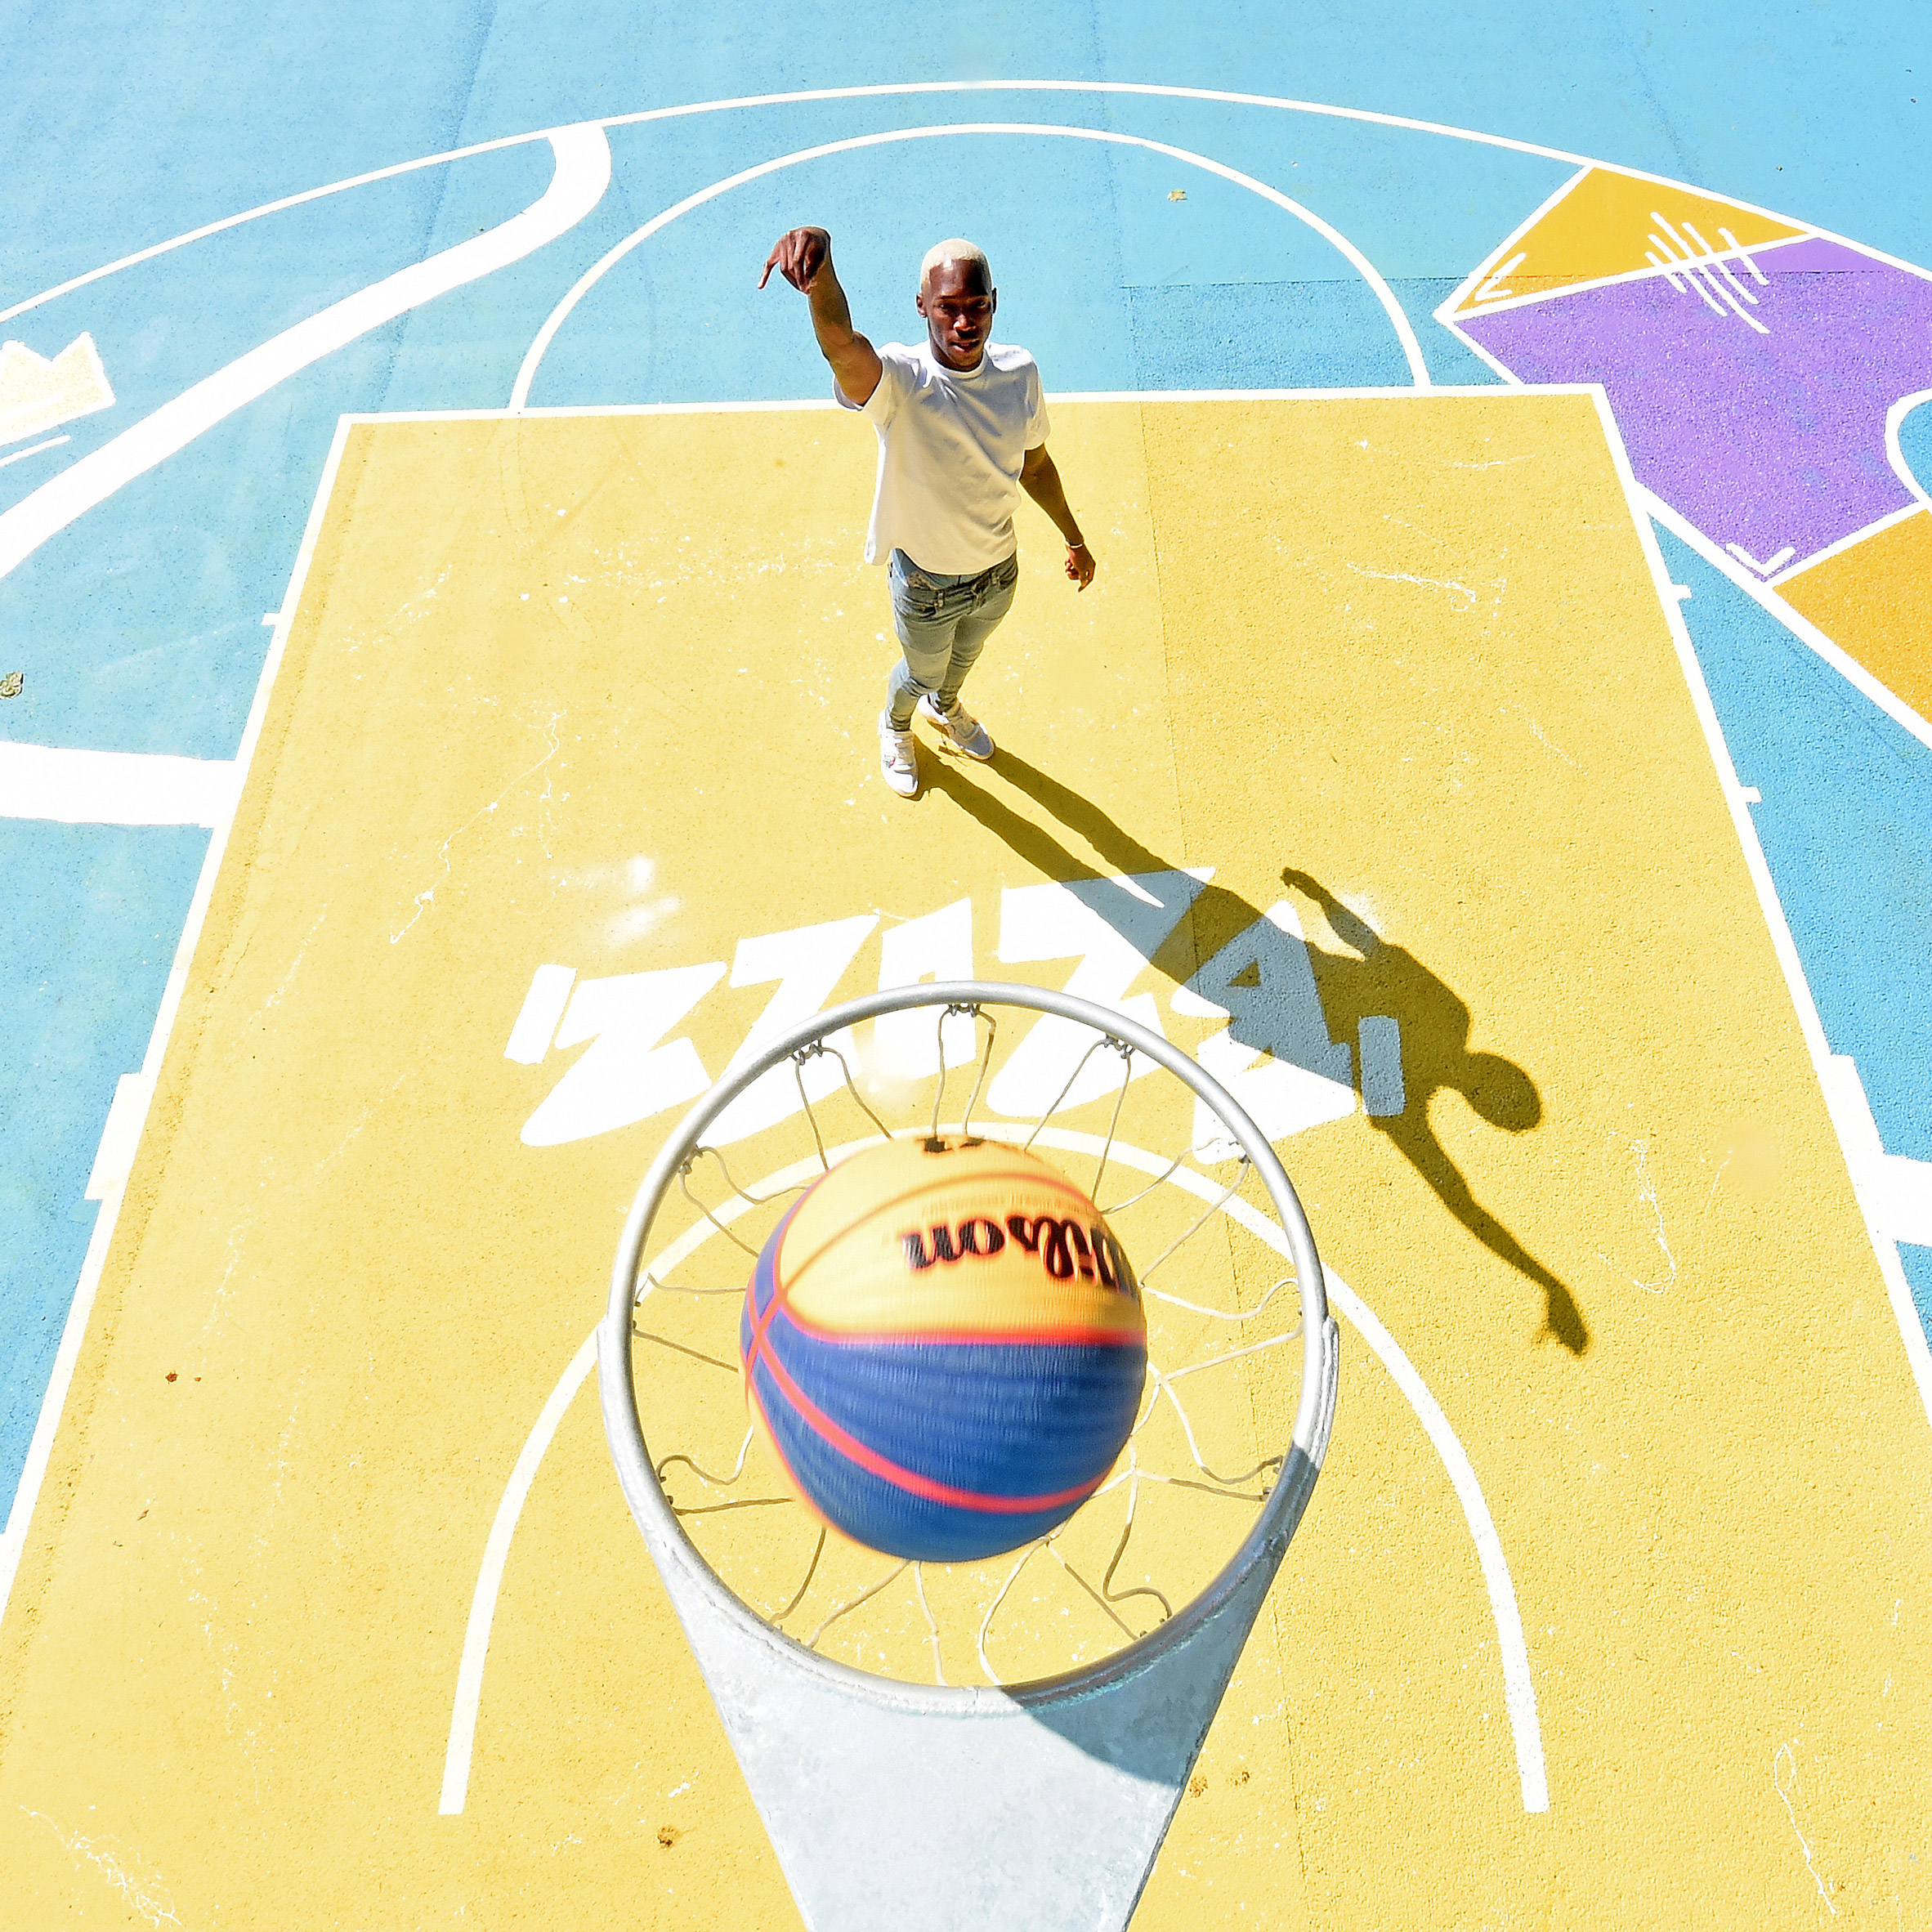 a man shoots a ball into a hoop on a basketball court